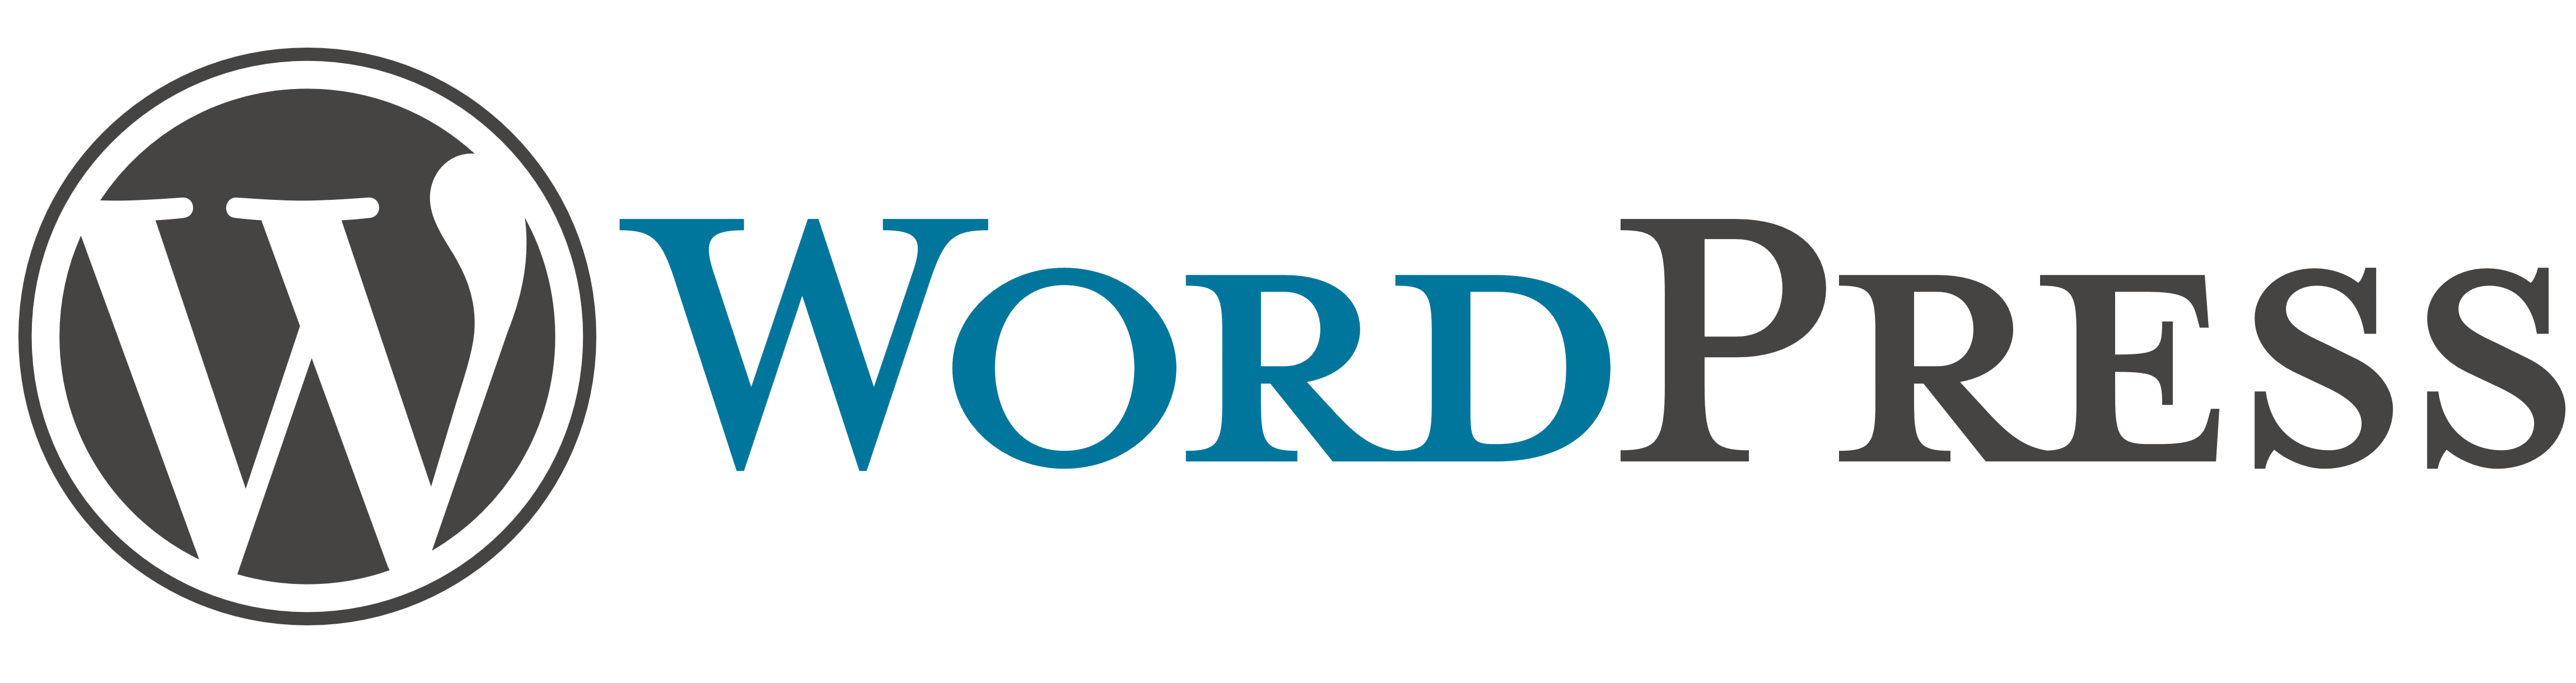 wordpress logotipo